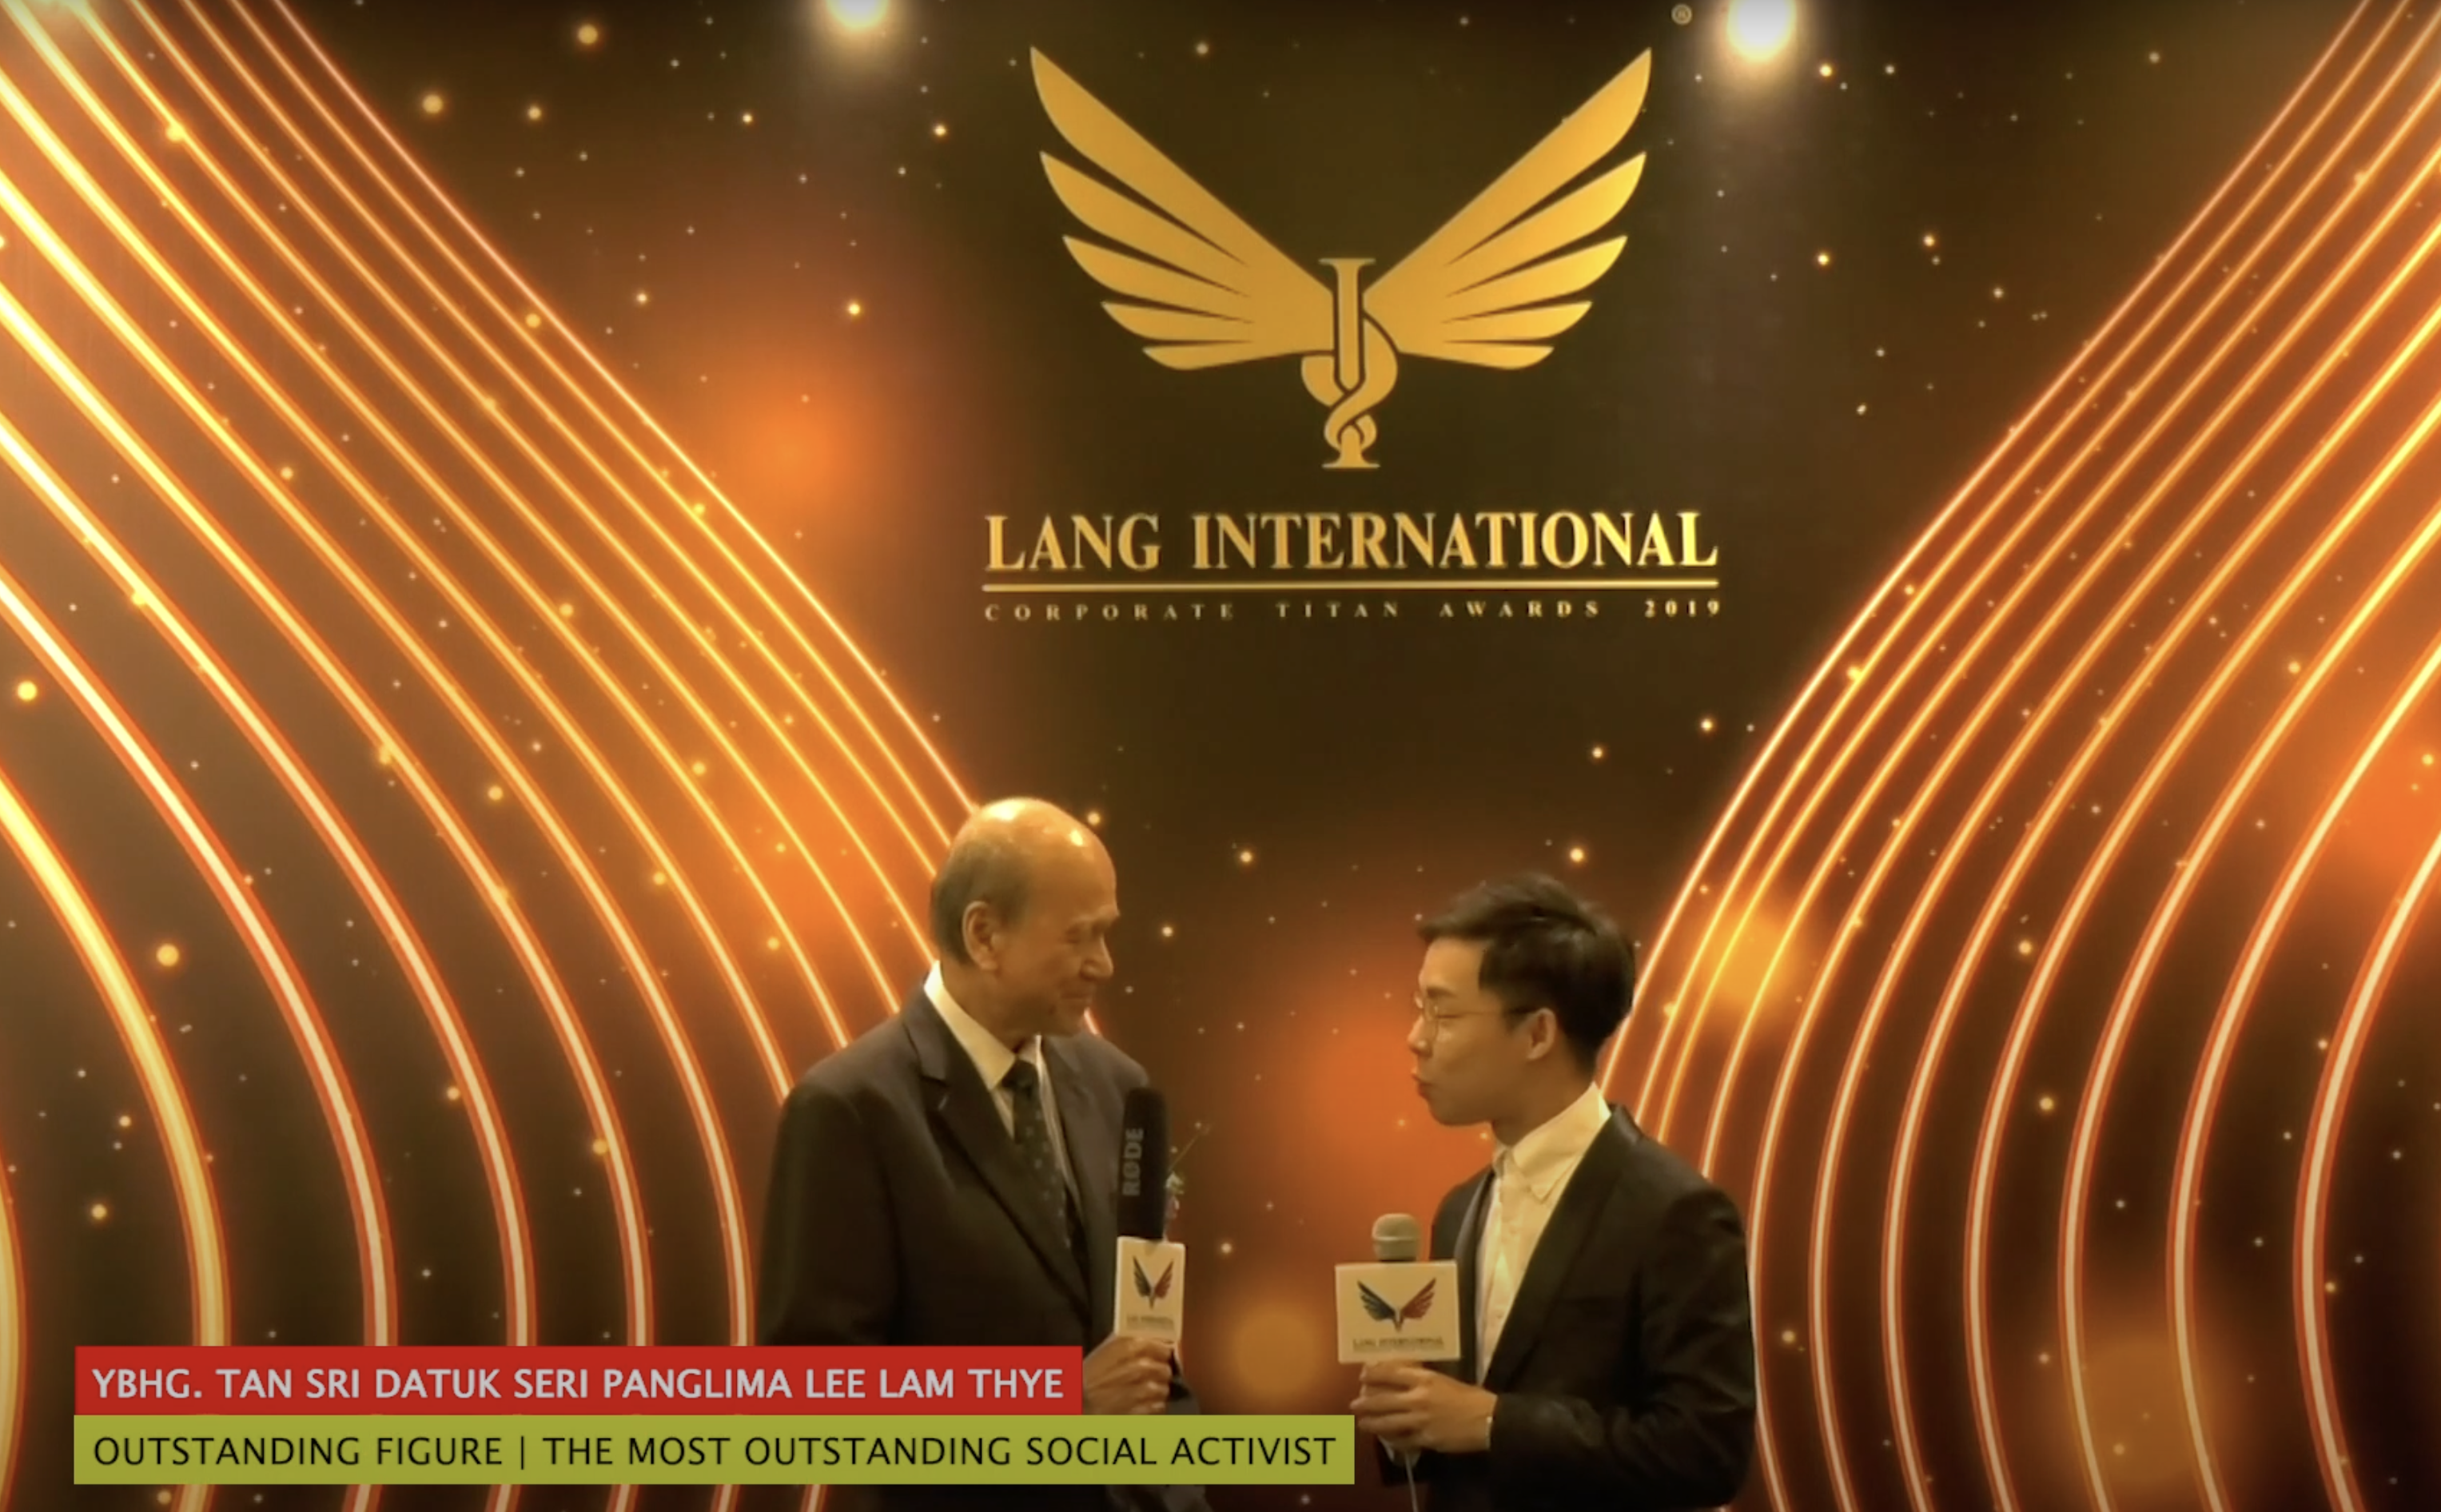 YBhg. Tan Sri Datuk Seri Panglima Dr. Lee Lam Thye awarded "The Most Outstanding Social Activist" by the prestigious Lang International Corporate Titan Awards (LICTA)